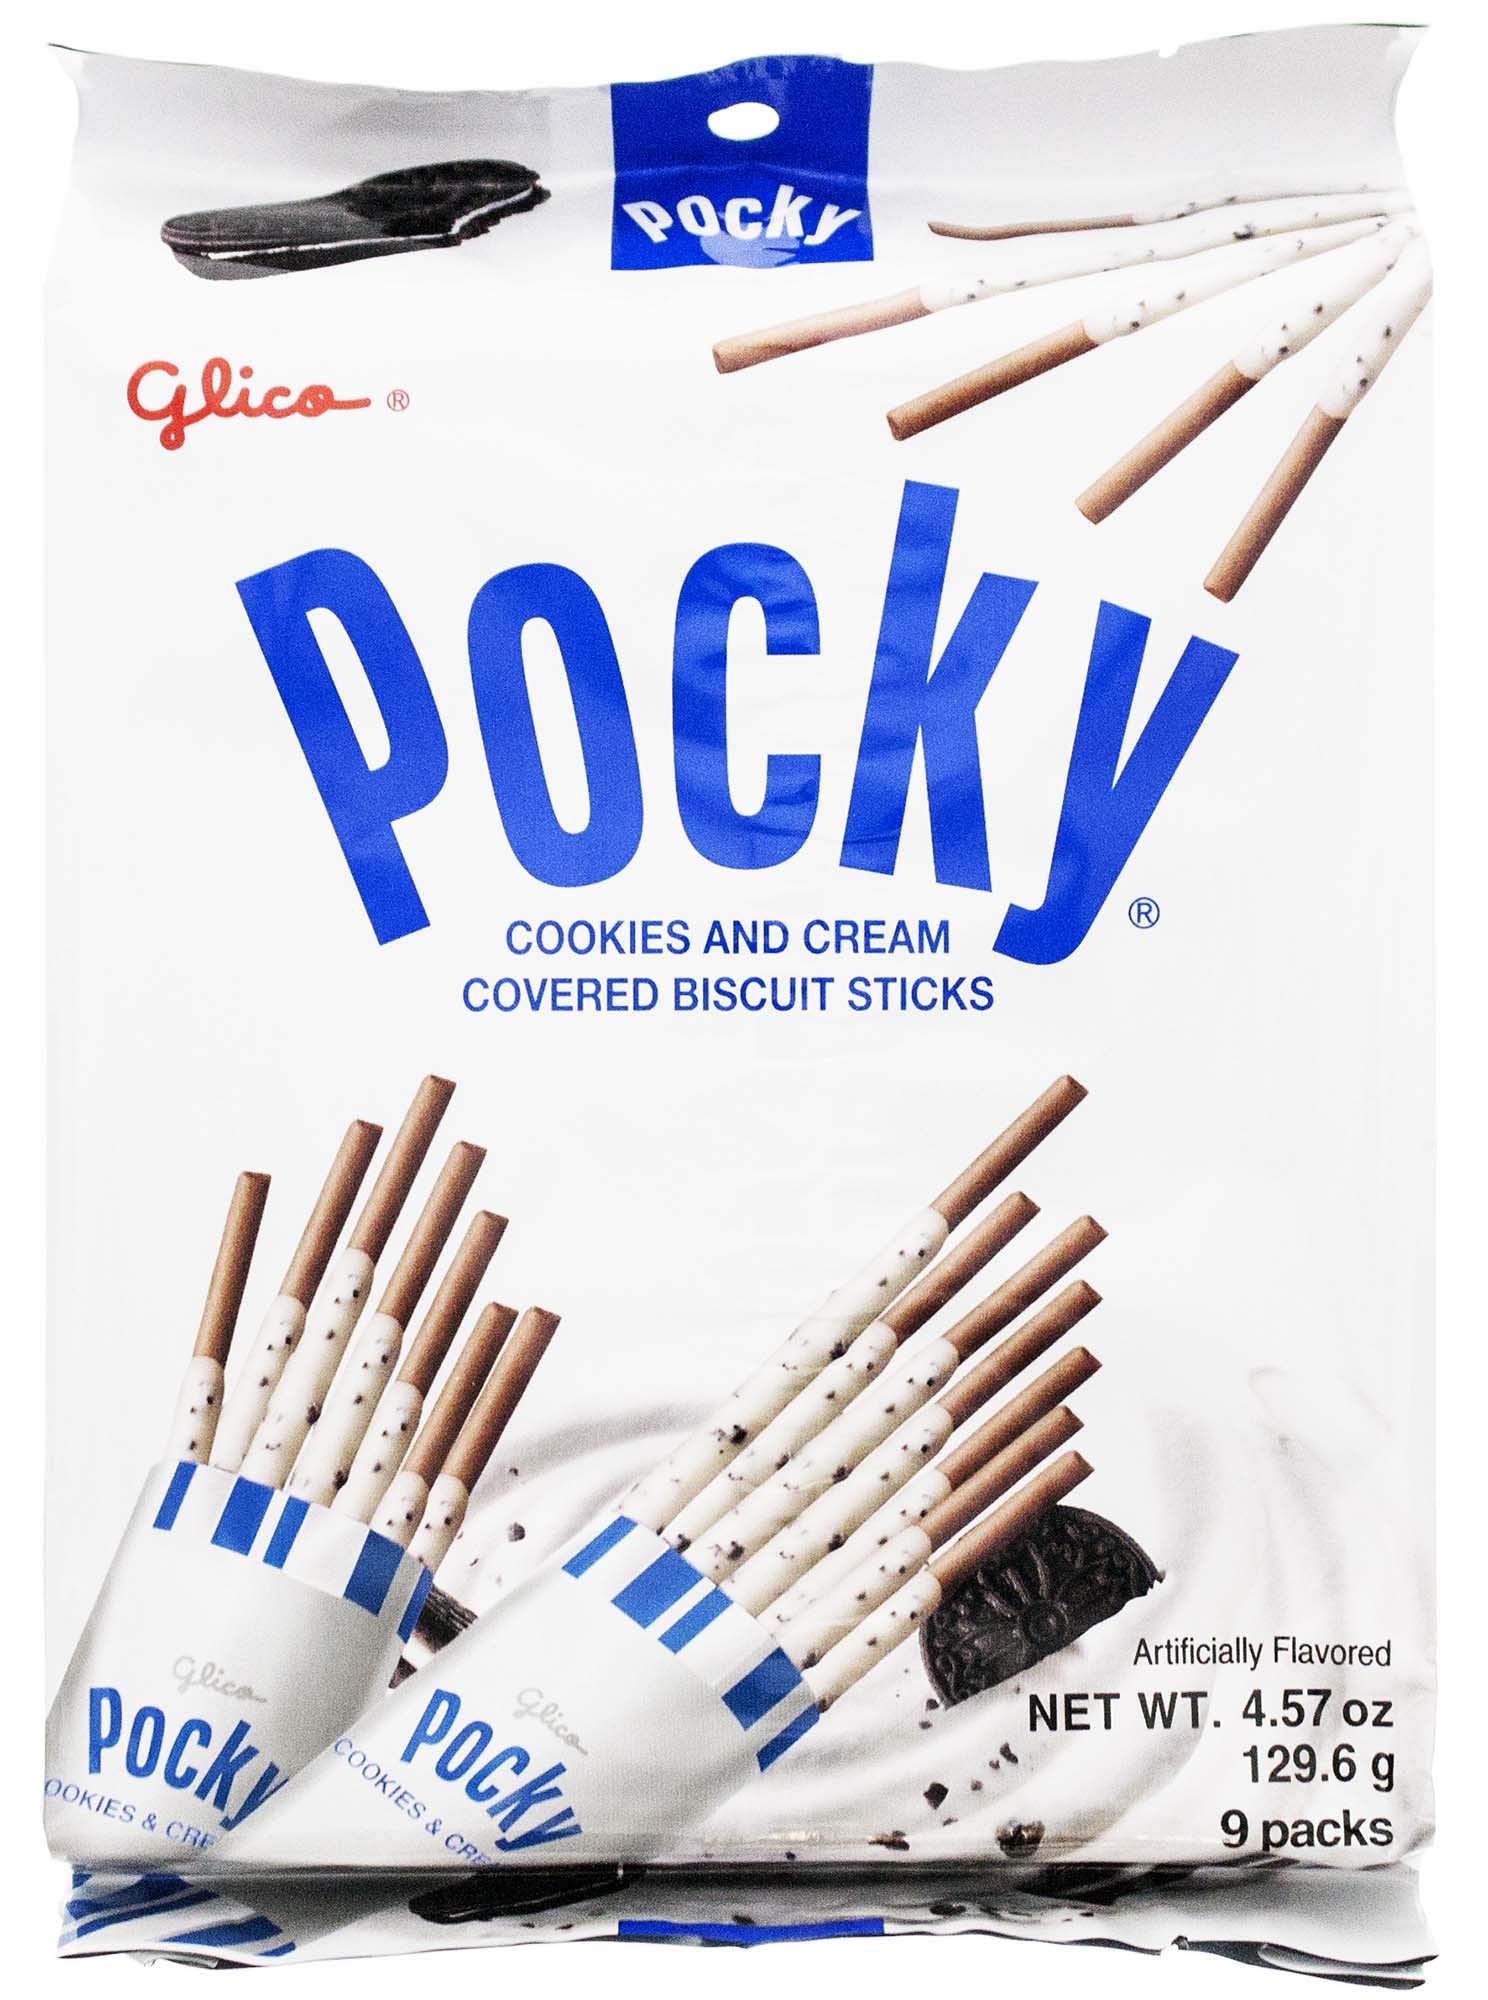 Glico Cookie And Cream Covered Cocoa Biscuit Sticks Amazon.com $2.86 w/15% S&S, $3.20 w/5% S&S